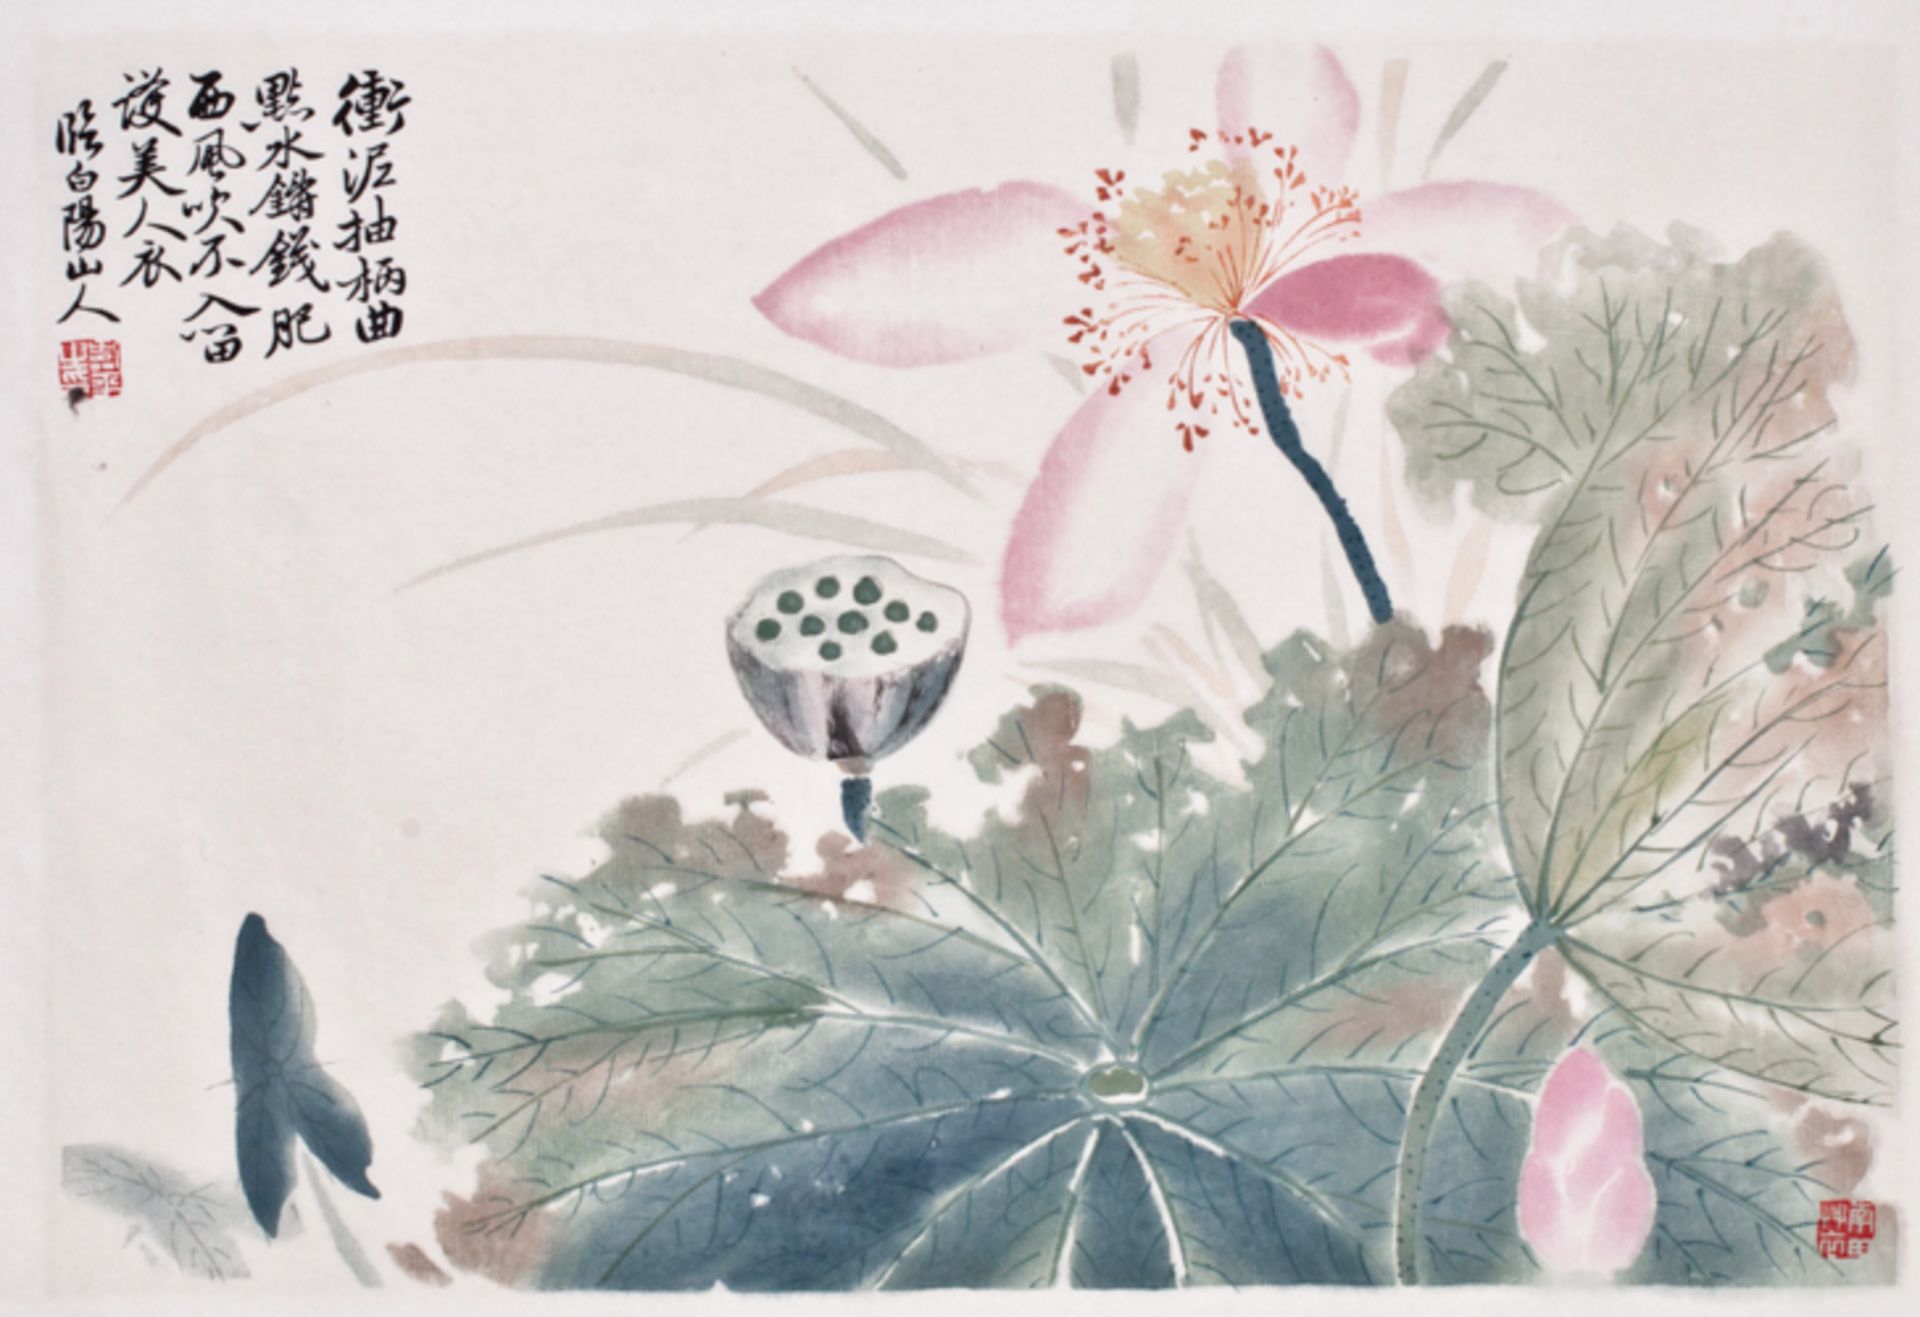 FLOWERING LOTUS  Woodblock print. China, 20th century  Atmospheric sheet, depicting flowering